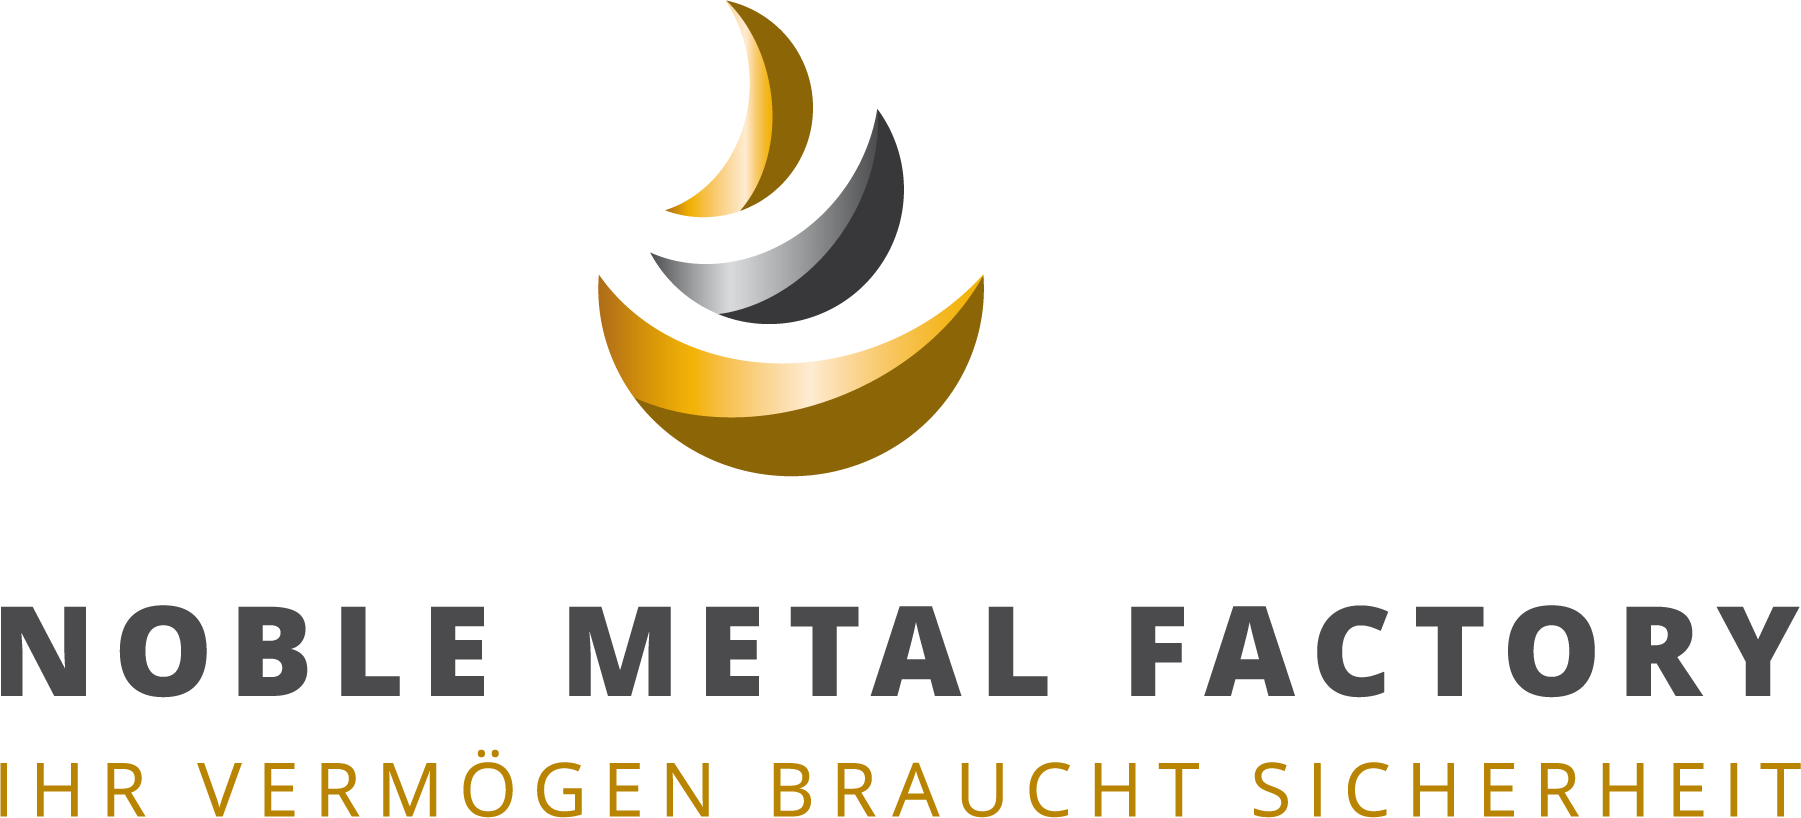 Noble Metal Factory -
Goldsparanlage